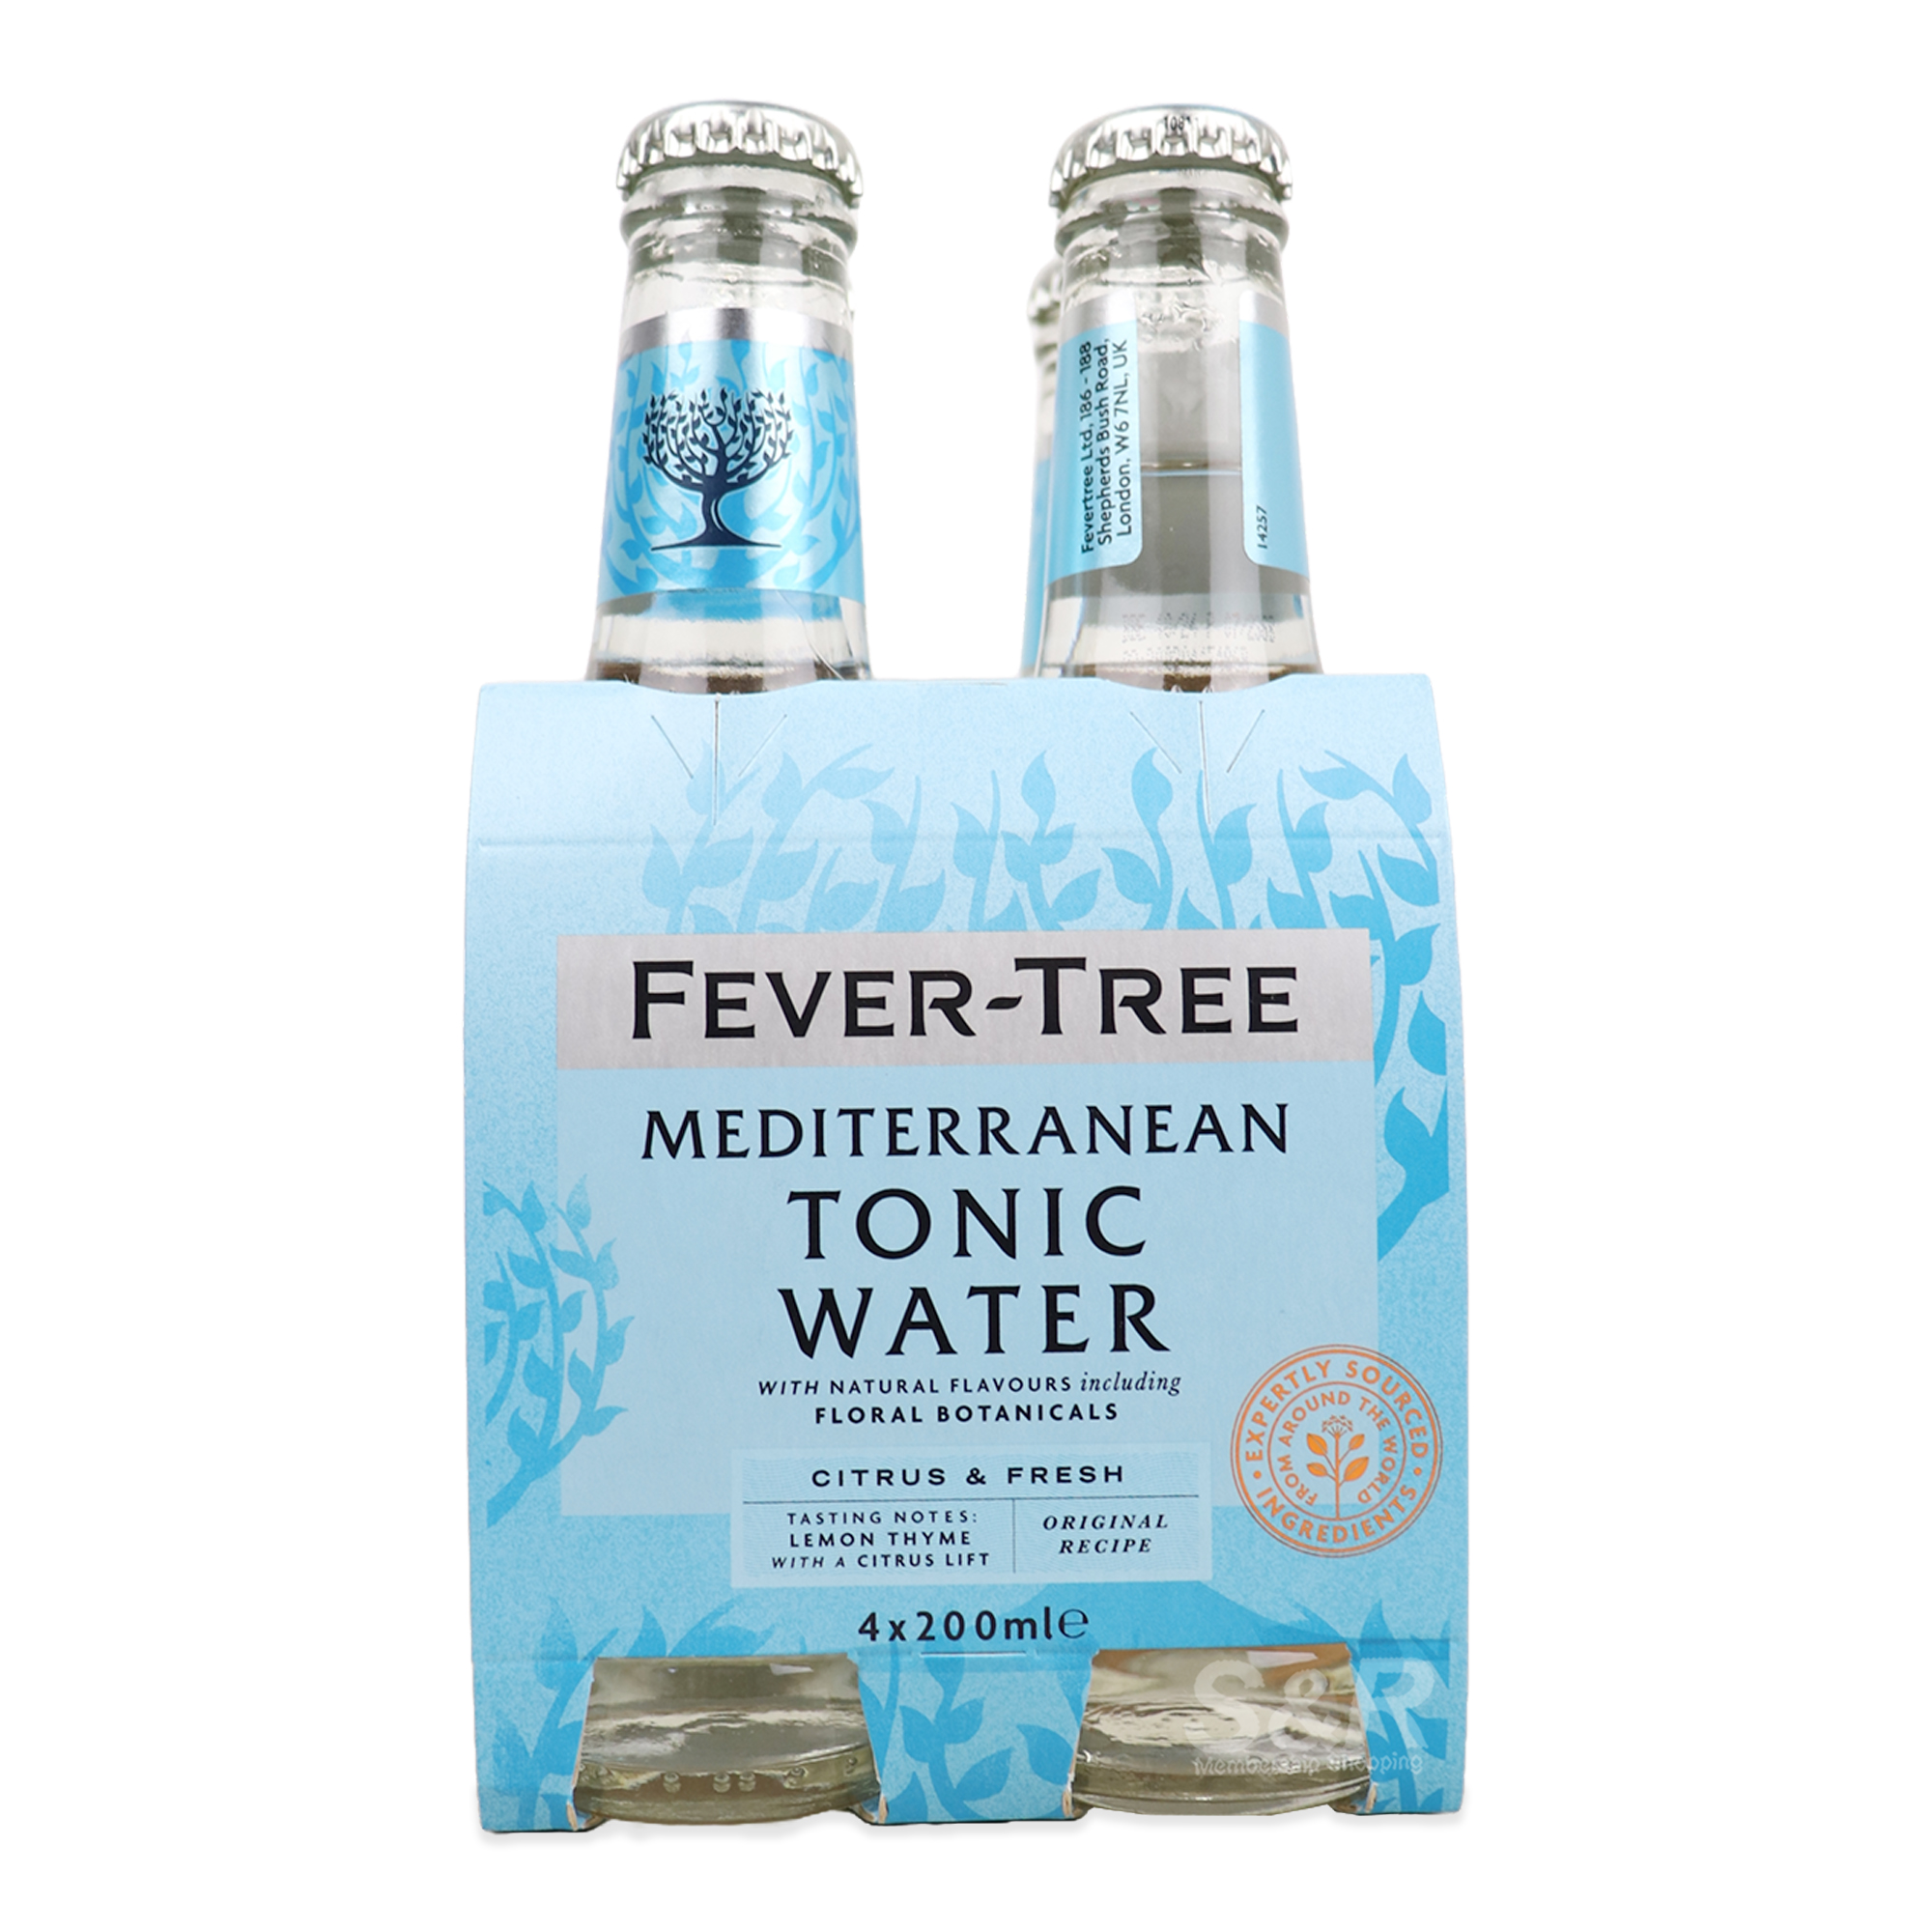 Fever-Tree Mediterranean Tonic Water 4x200mL